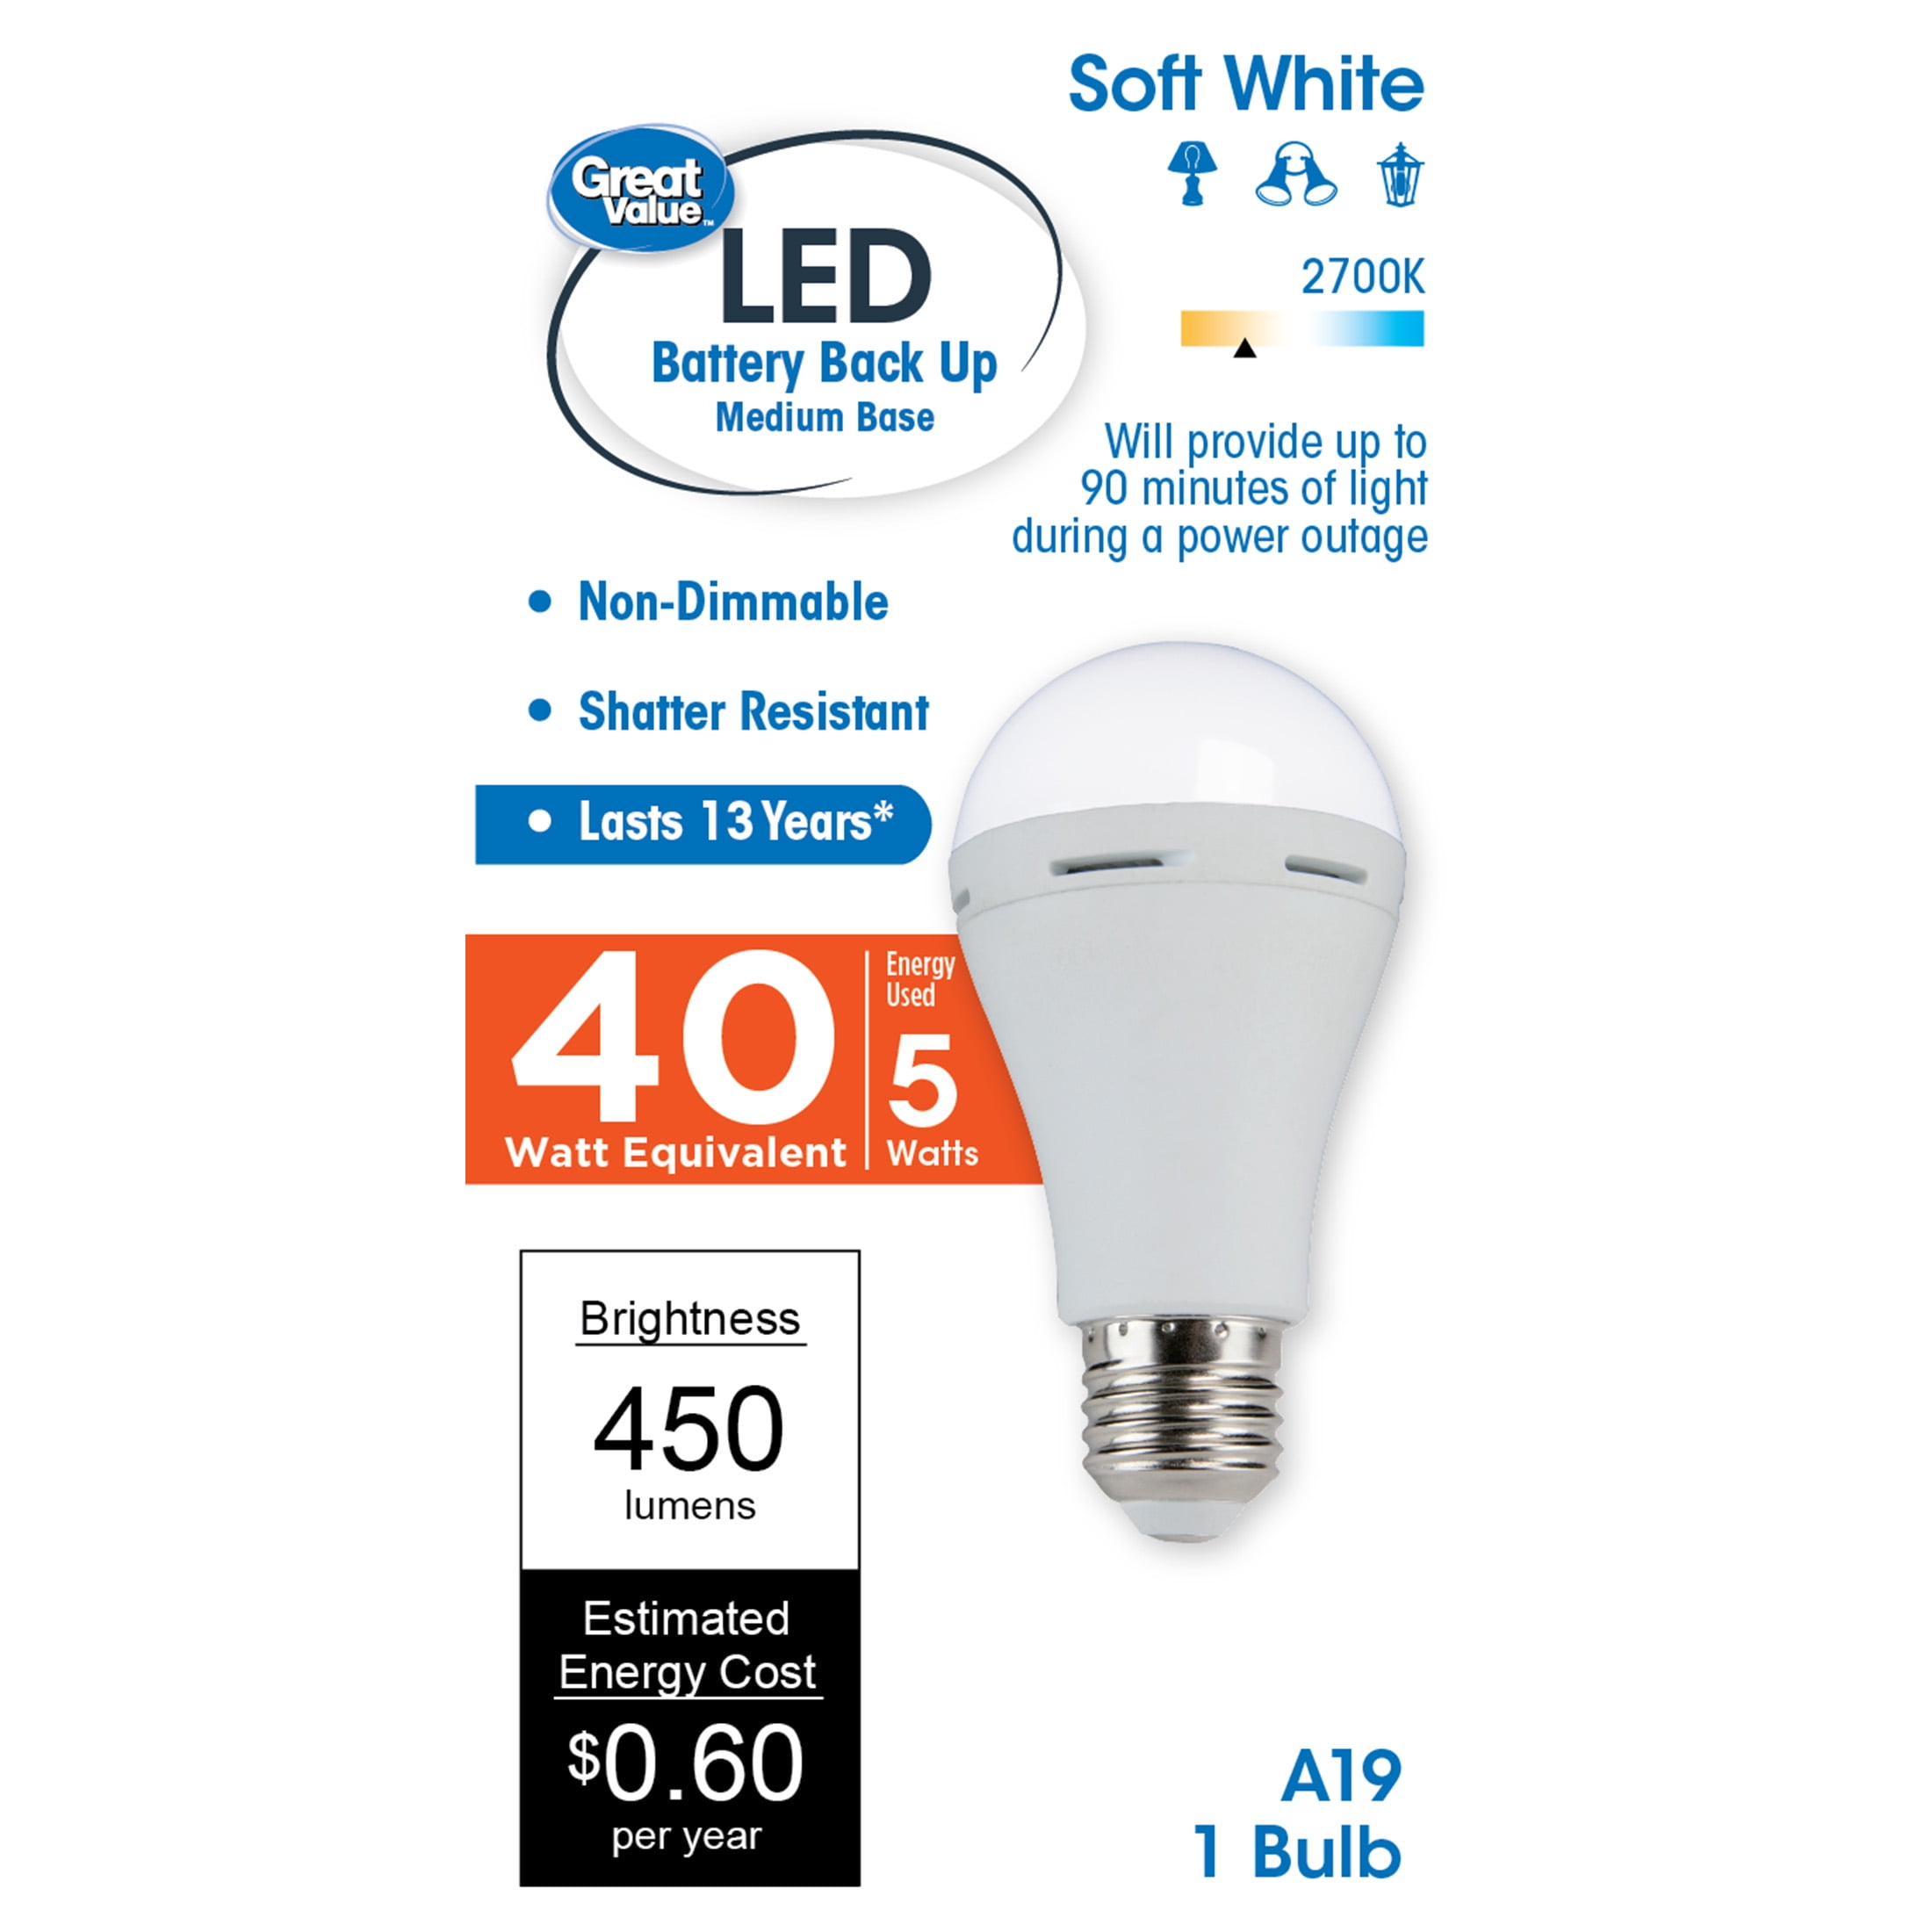 Value LED Light Bulb, 5 Watts Eqv.) A19 Battery Backup Lamp E26 Medium Non-dimmable, Soft White, 1-Pack - Walmart.com